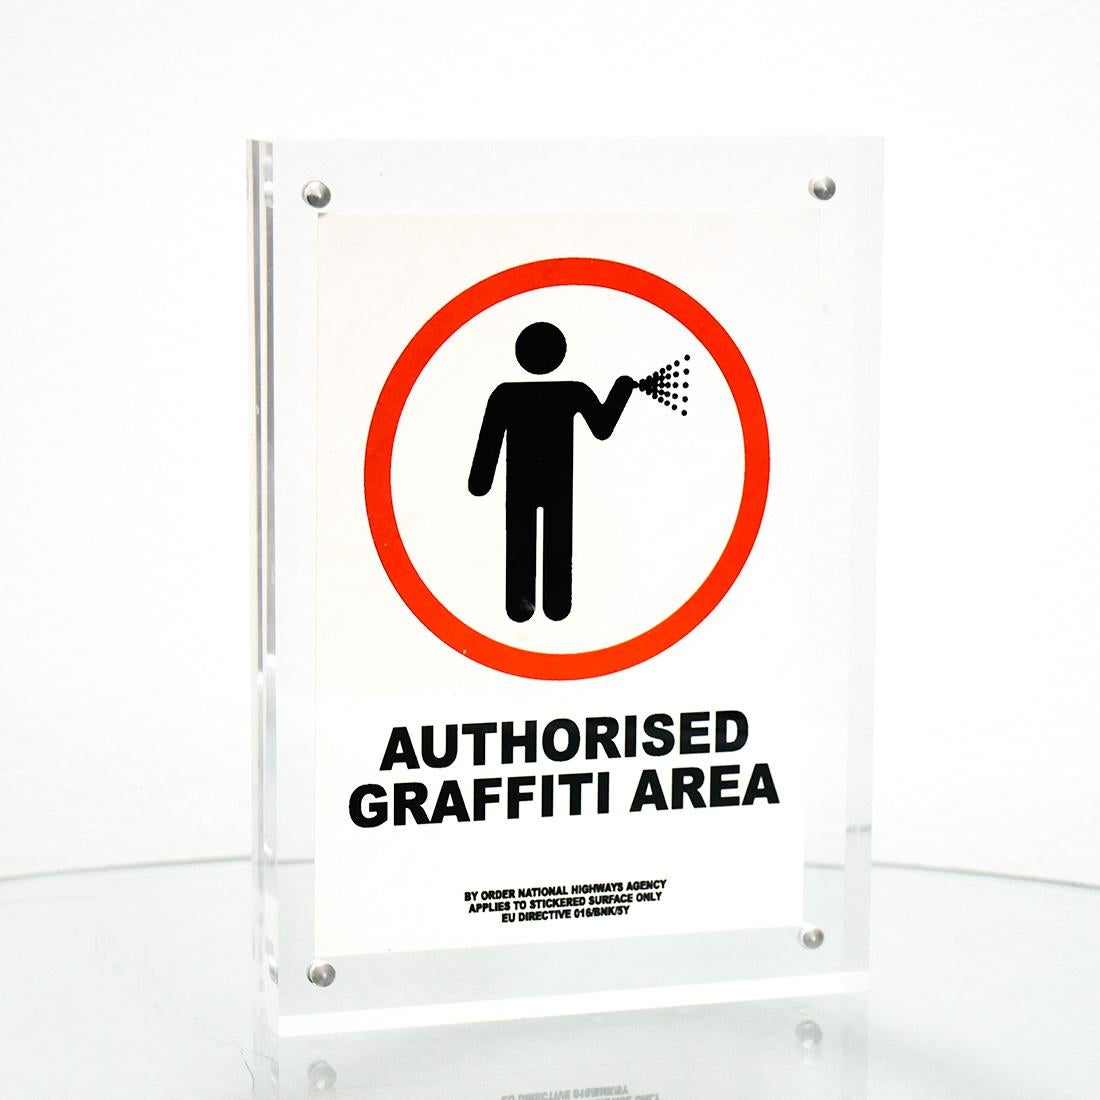 BANKSY Authorised Graffiti Area 016/BNK/5Y Sticker (Framed) - Print by Banksy